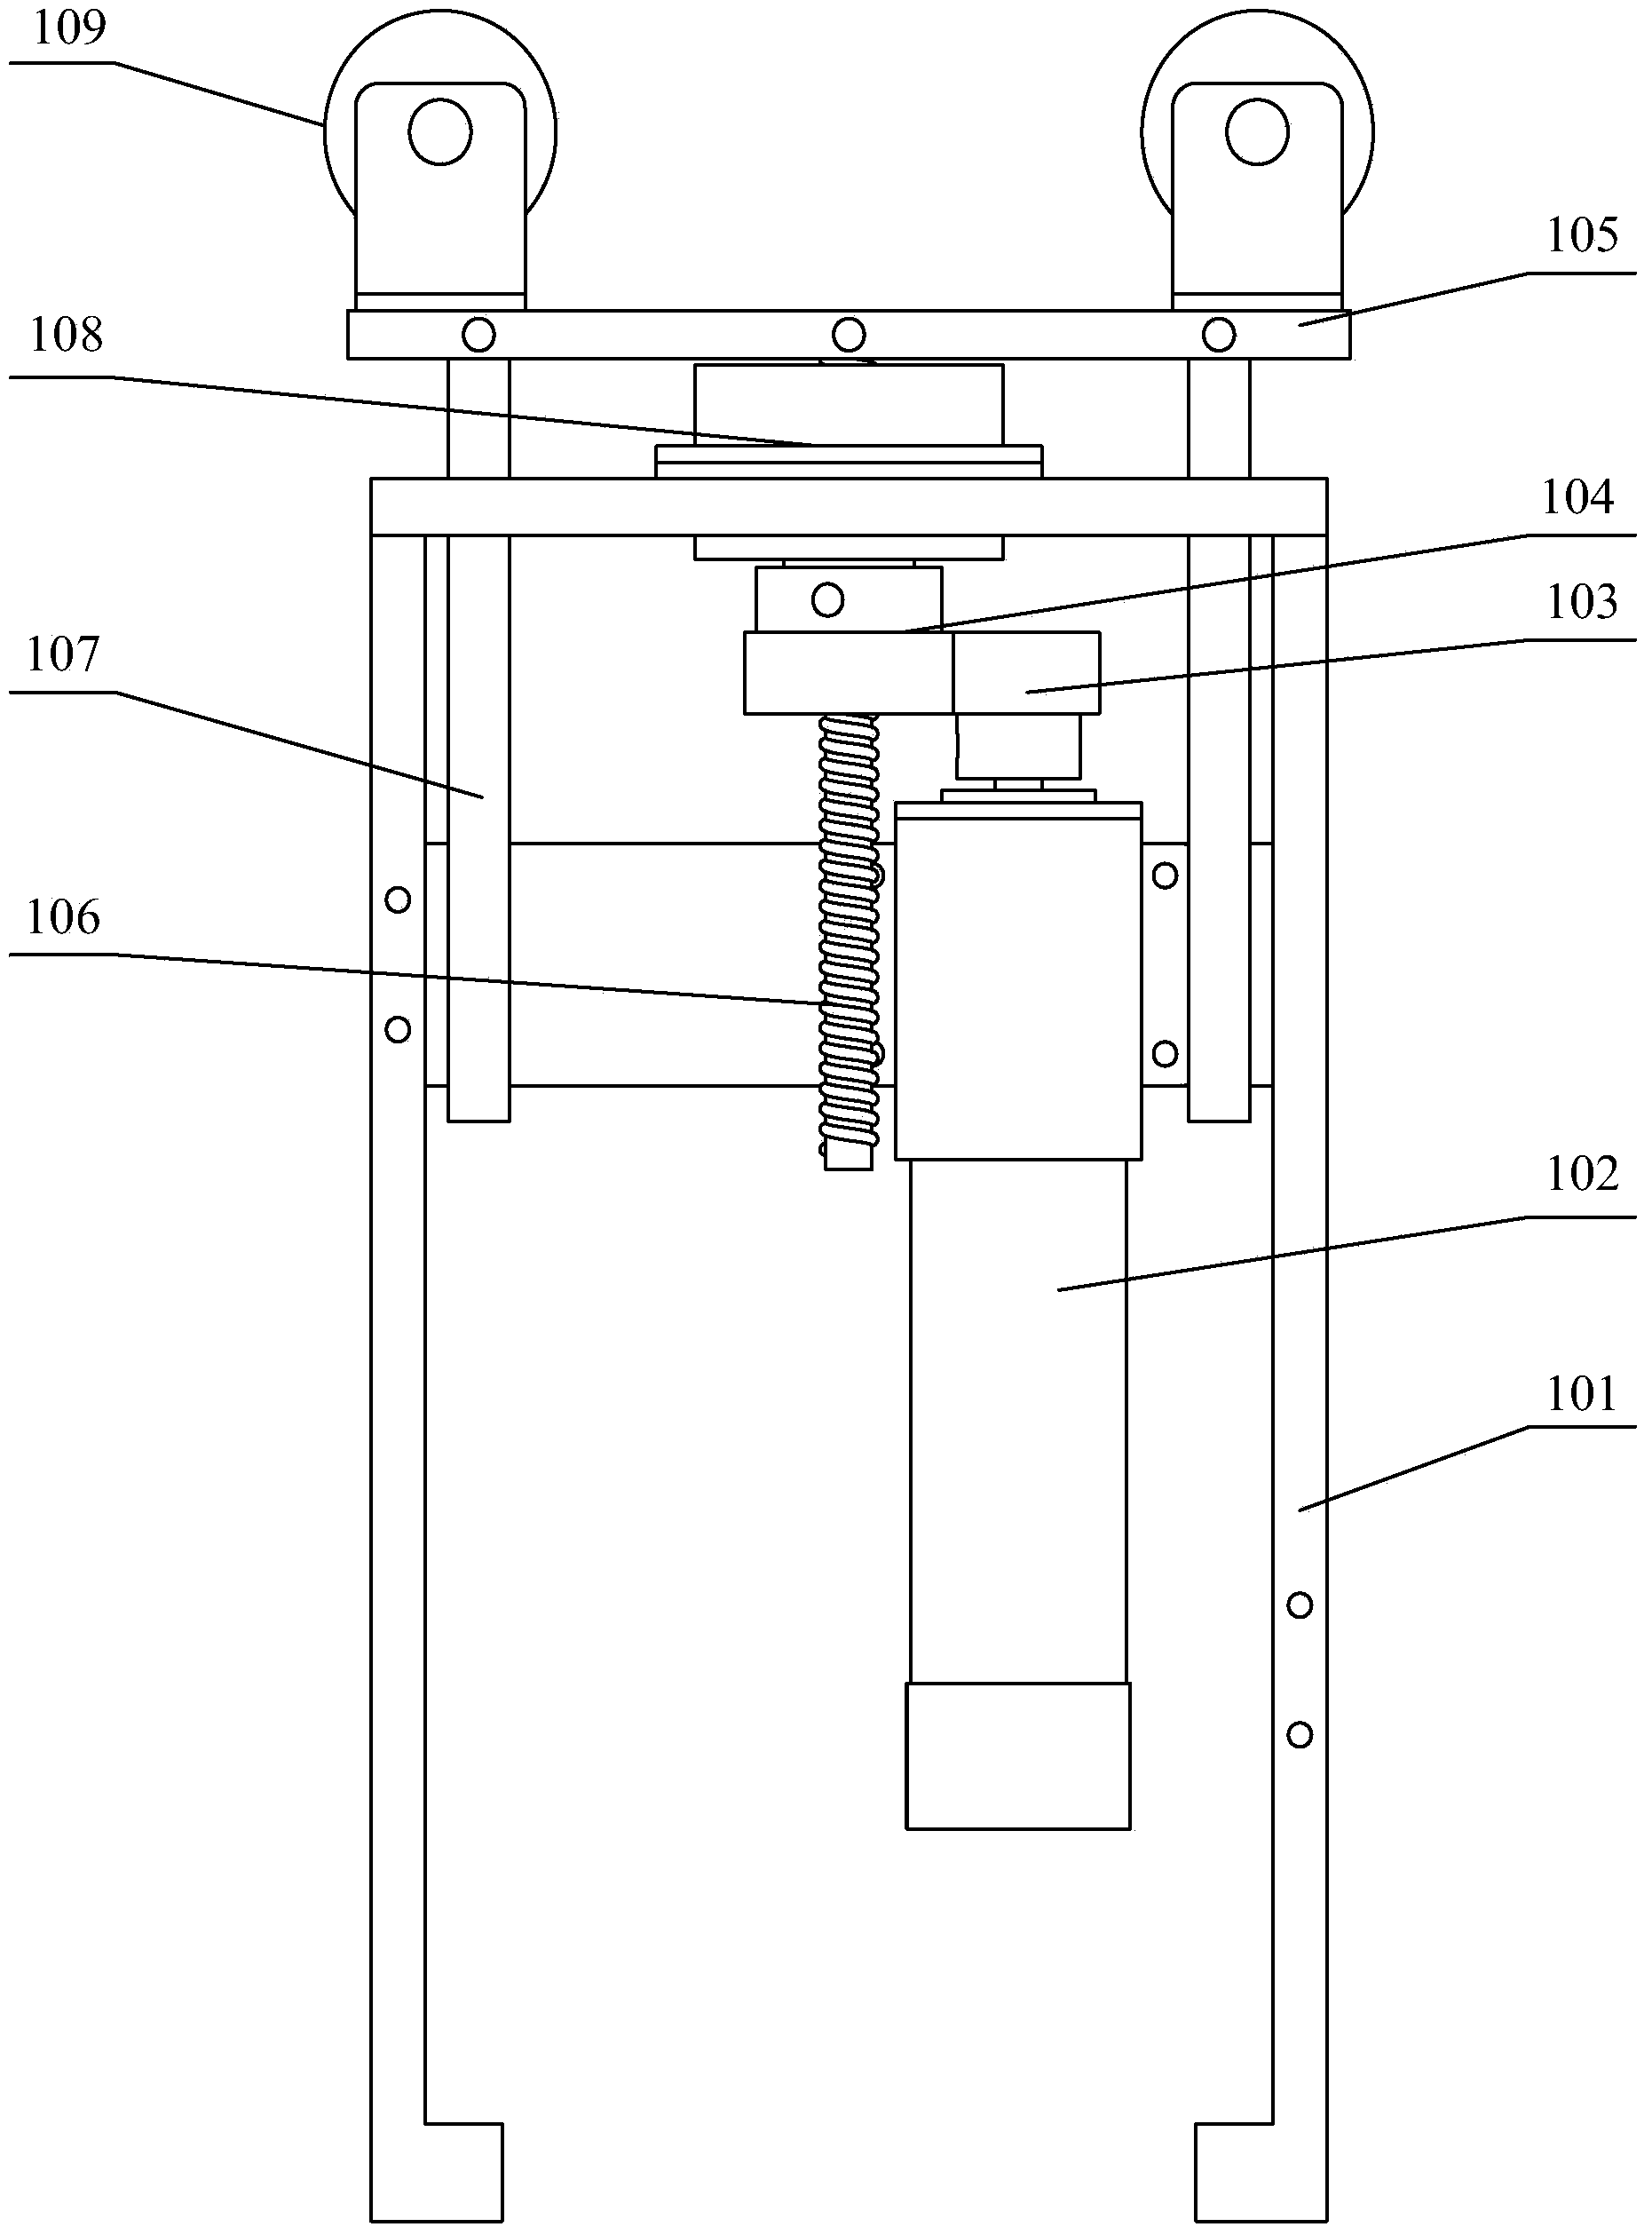 Pinch roller mechanism and traveling wheel set mechanism